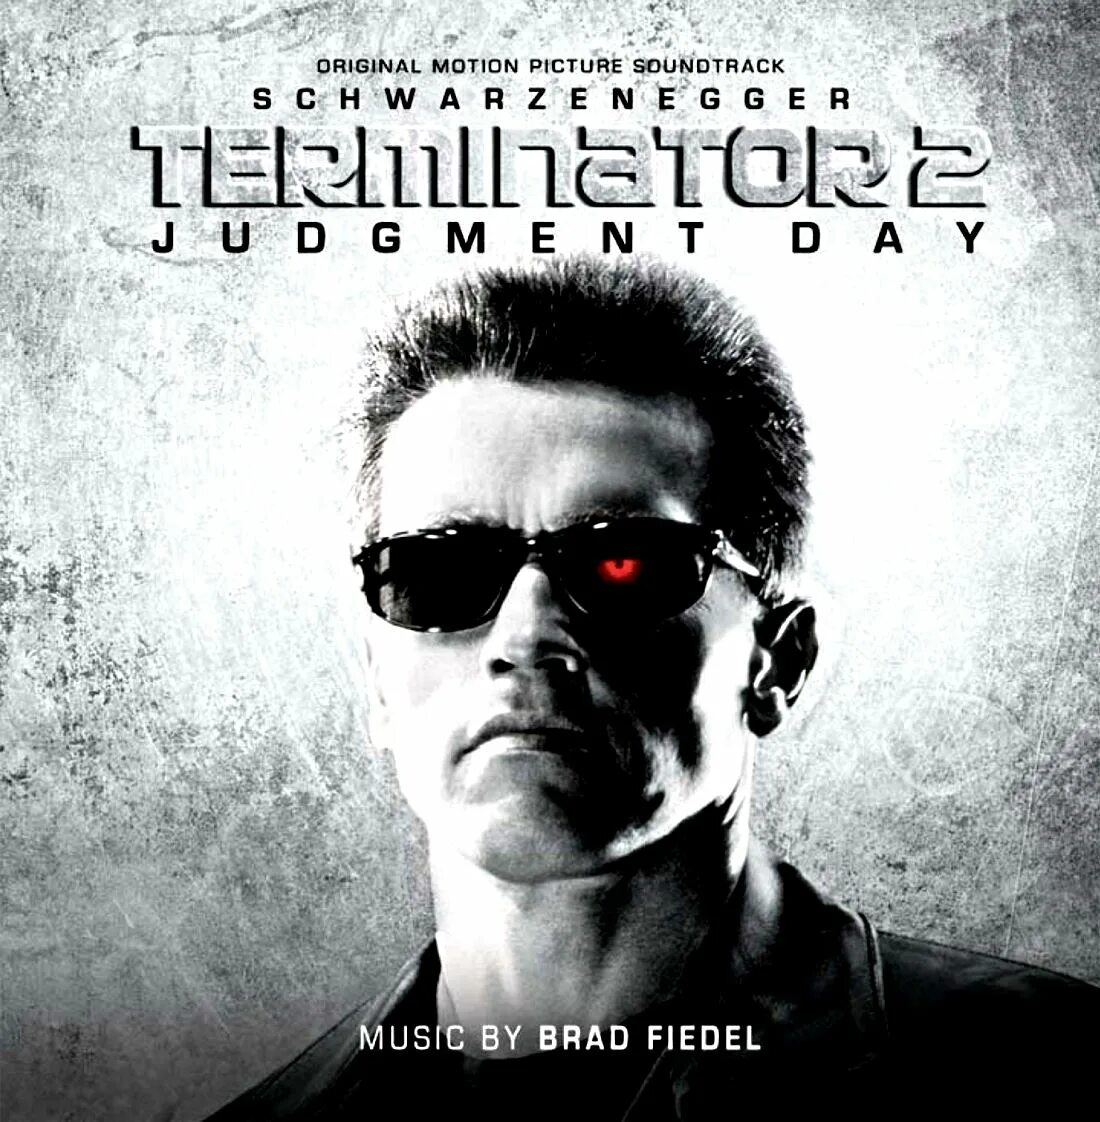 Ost terminator. Brad Fiedel Terminator 2. Brad Fiedel Terminator Theme. Terminator 2 Judgment Day.